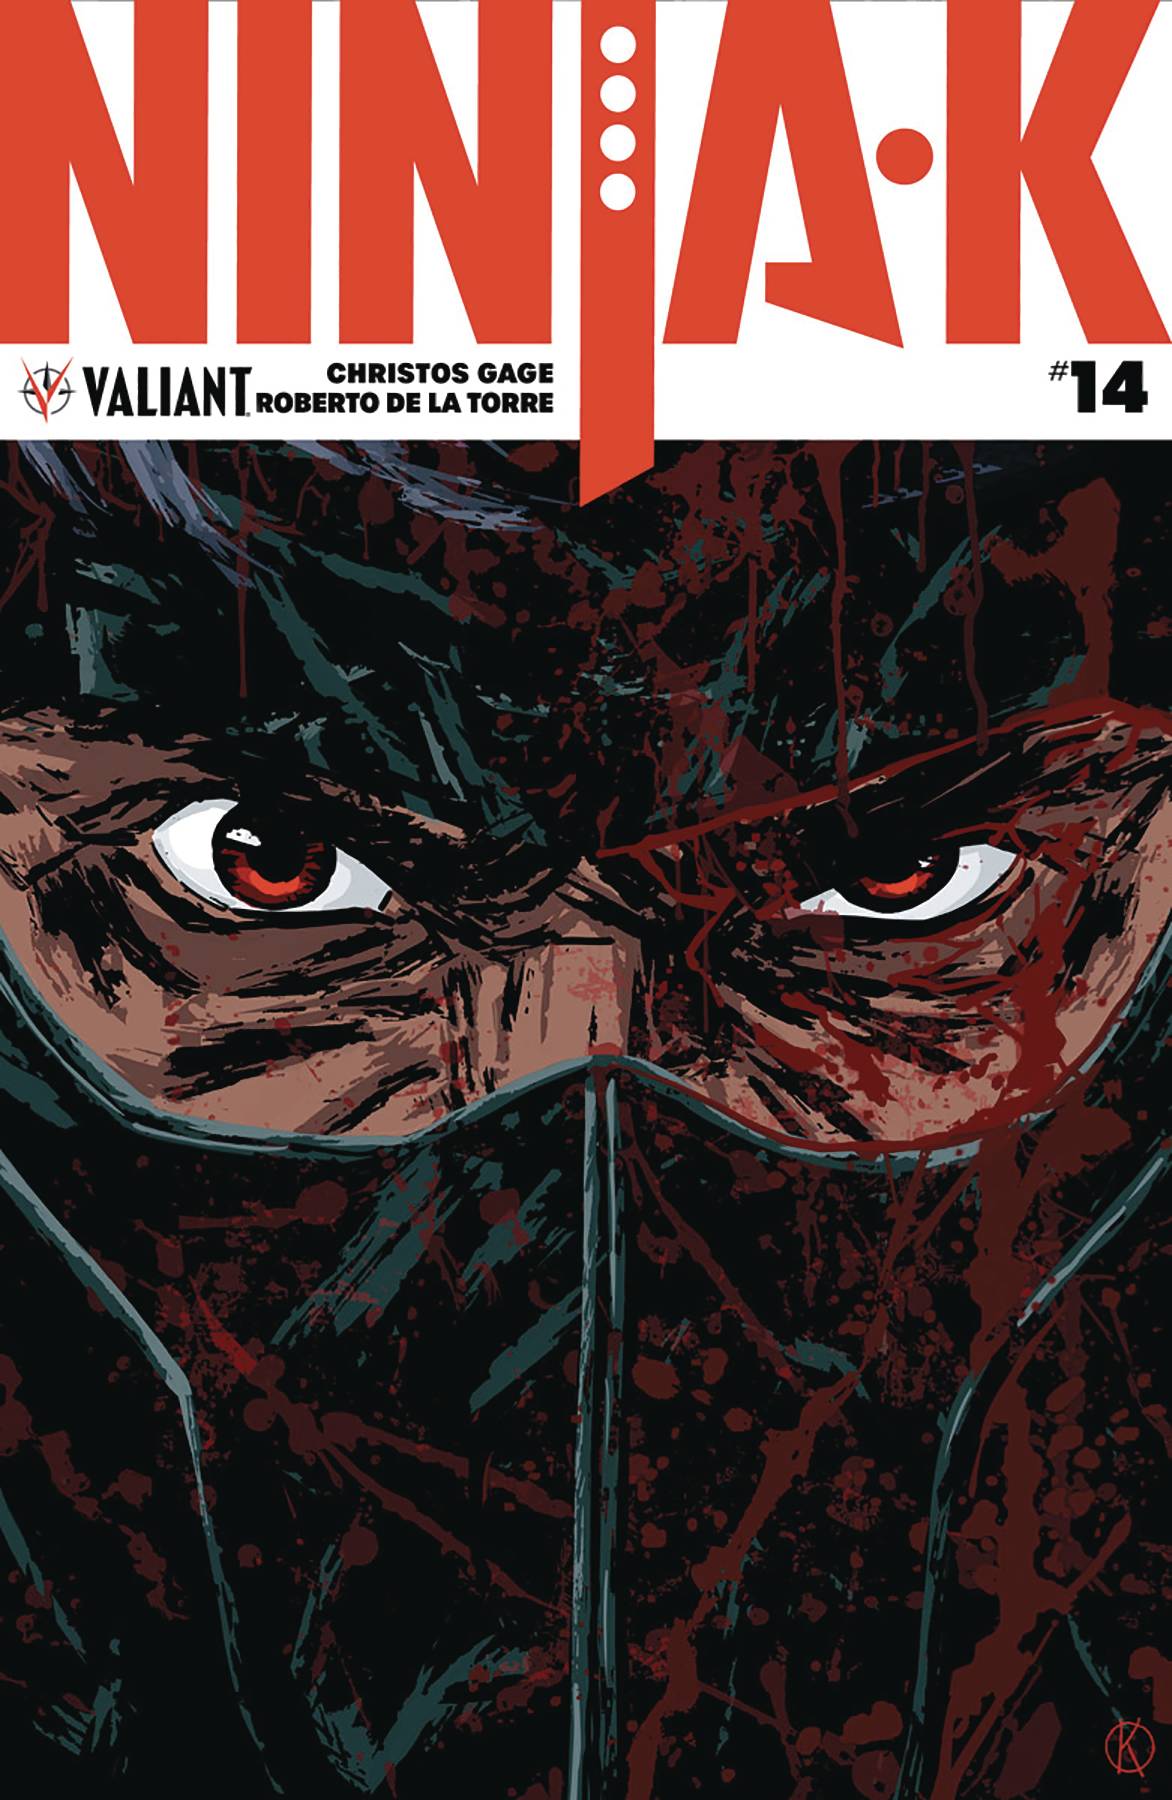 Ninja-k #14 Cover A Kano